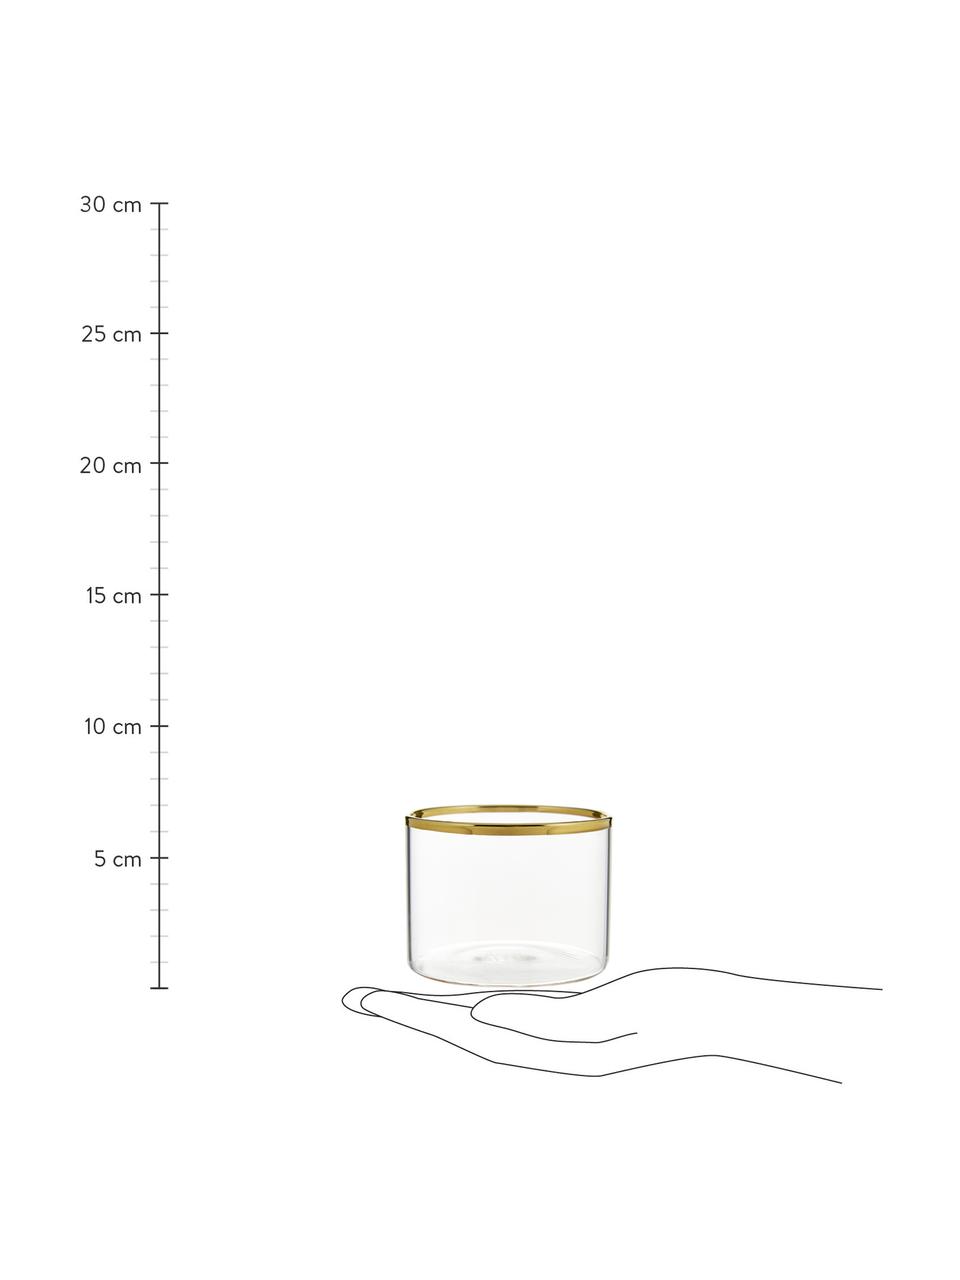 Waterglazen Boro van borosilicaatglas met goudkleurige rand, 6 stuks, Borosilicaatglas, Transparant, goudkleurig, Ø 8 x H 6 cm